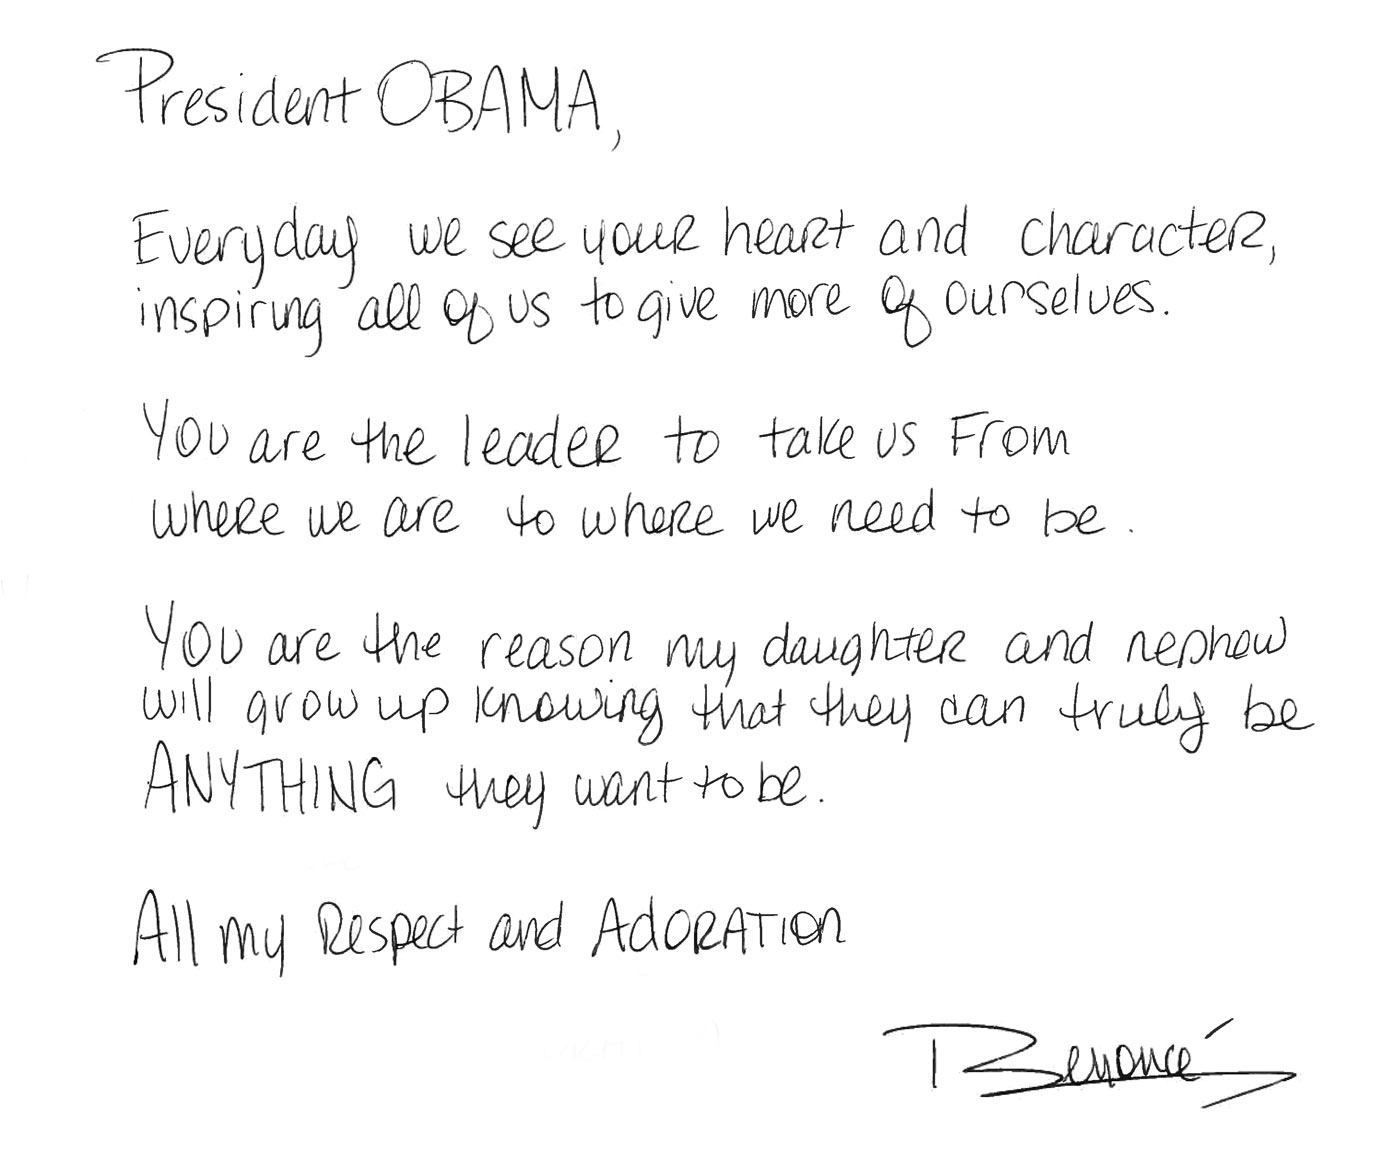 http://2.bp.blogspot.com/-StOG9yNTWLA/UJlEVxMzz9I/AAAAAAAAH2M/vSNknE2lr-Y/s1600/Obama+Beyonce+Letter++The+Lavish+World.jpeg